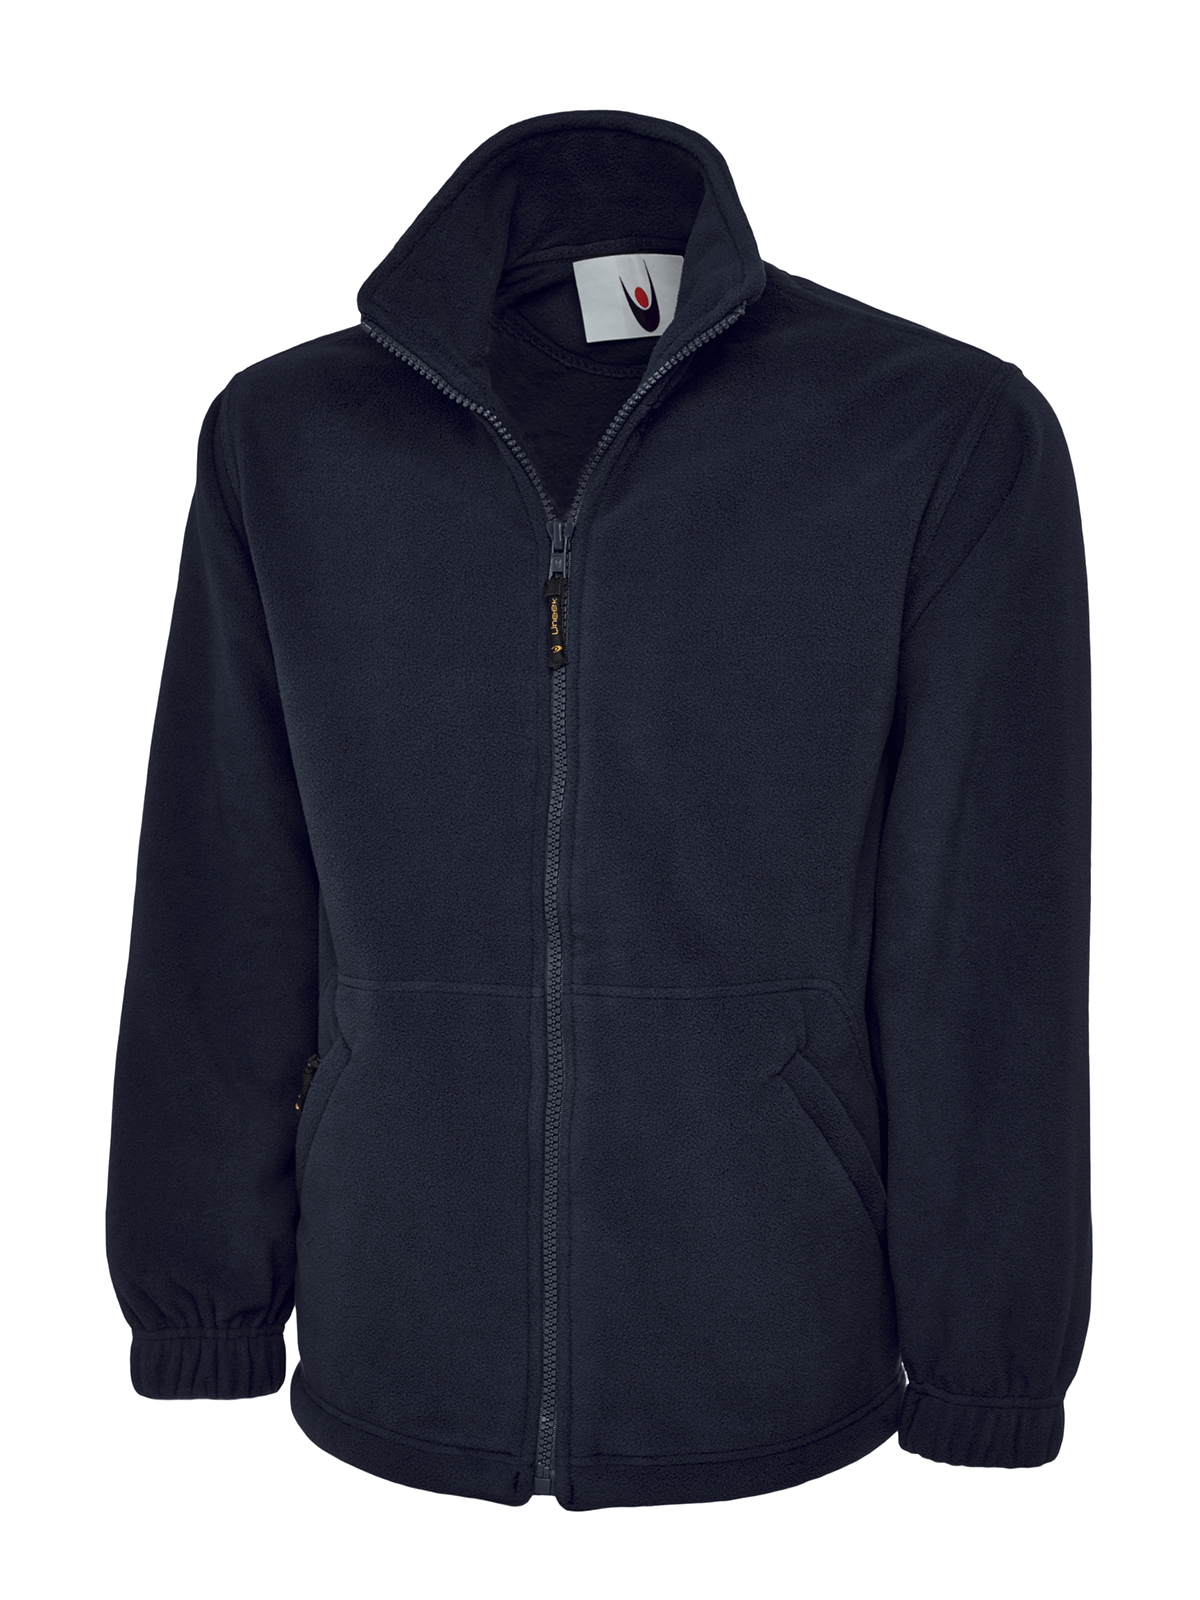 Full Zip Fleece Jacket, Navy - Size Medium